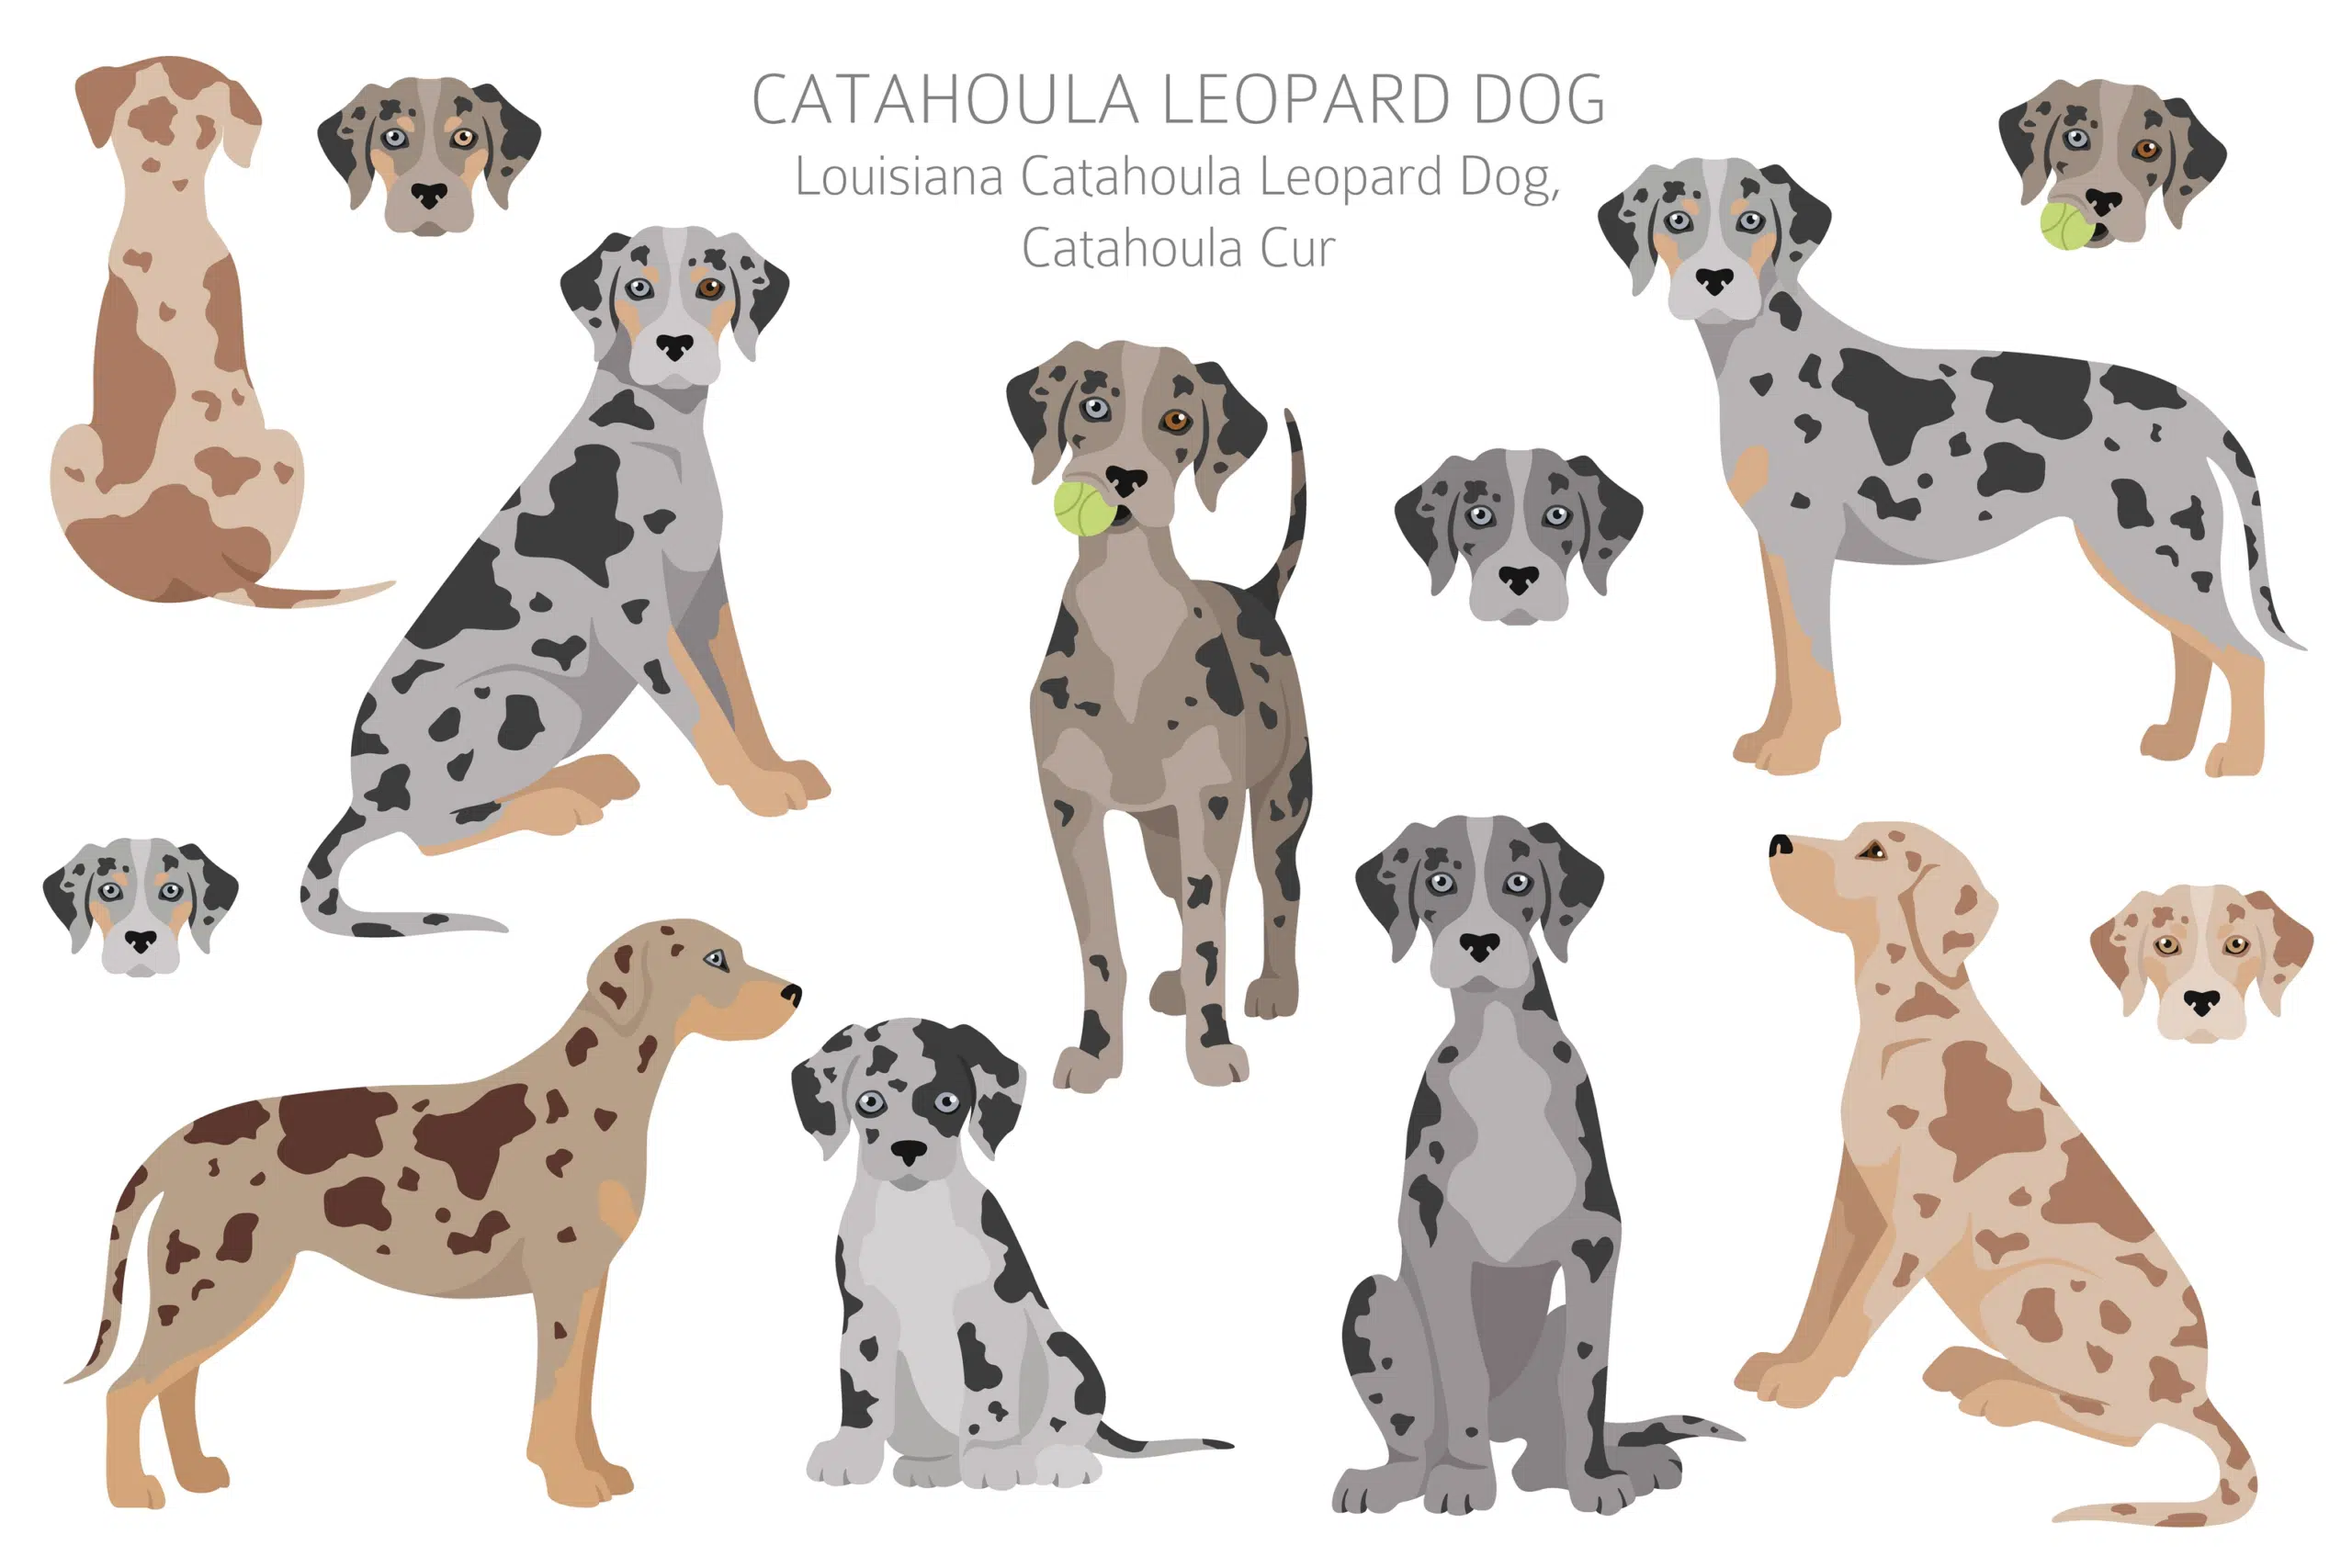 Various coats of the Louisiana Catahoula Leopard Dog, Catahoula Cur